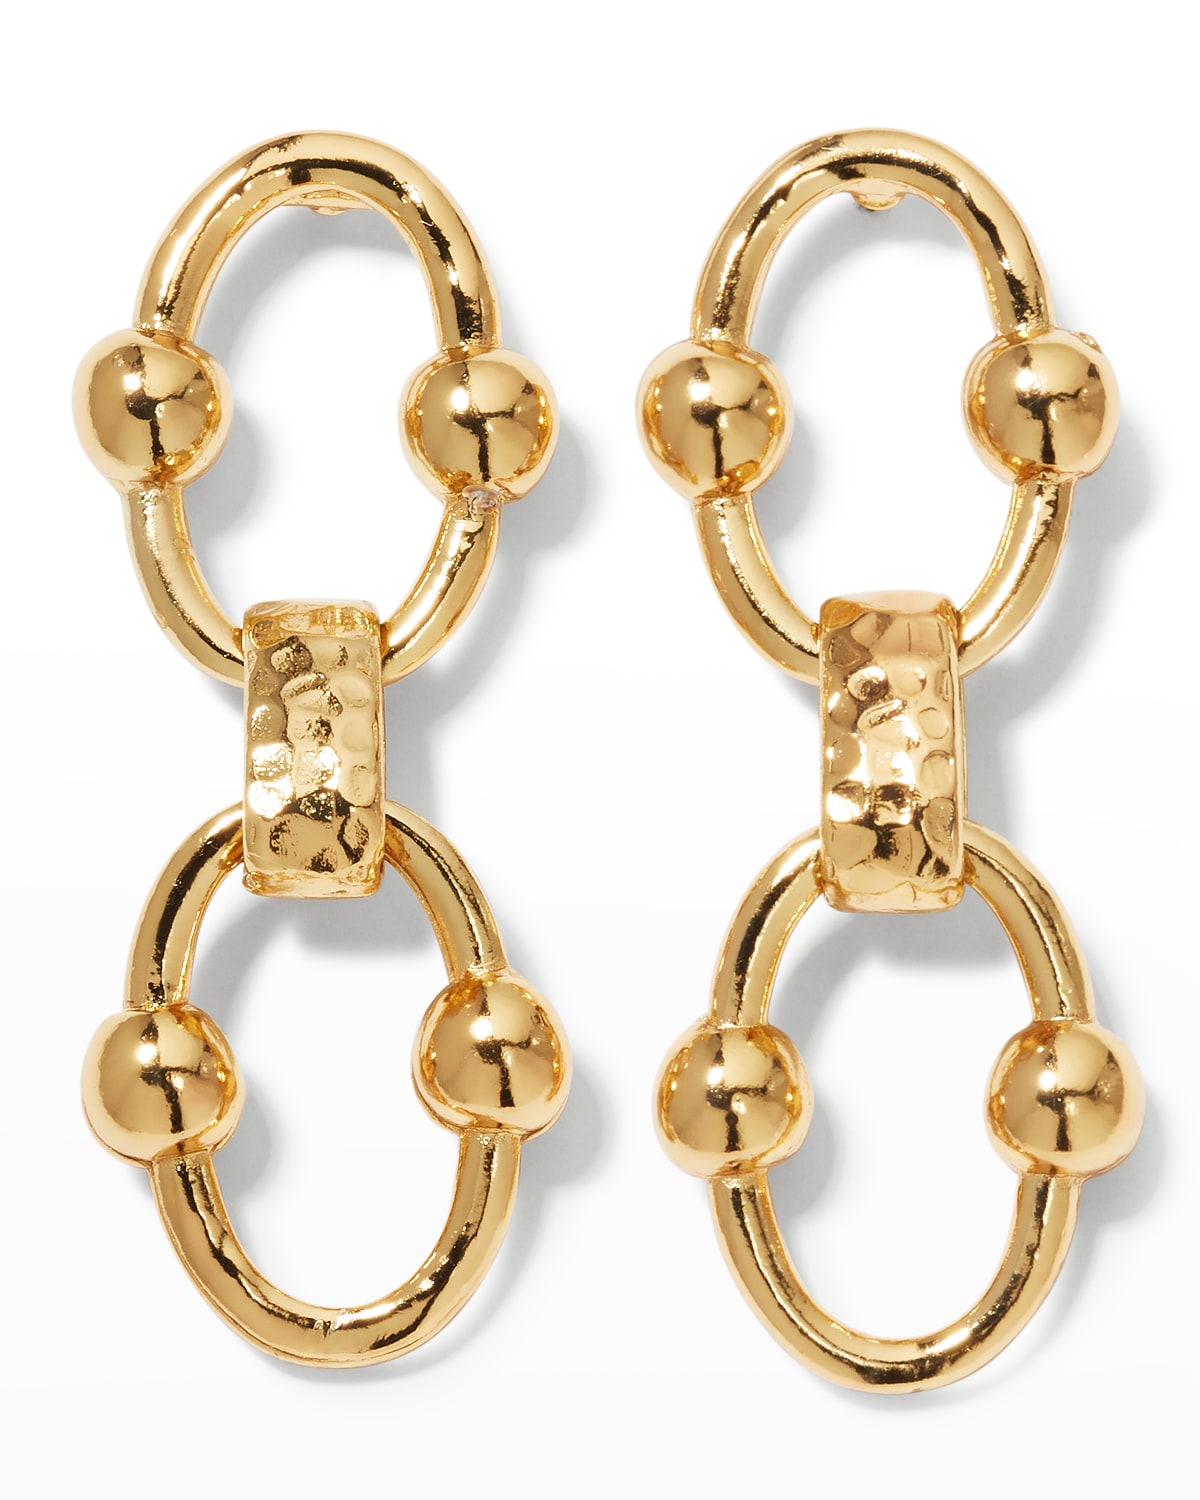 Pencil Designer Cz Fashion Dangle Earrings 18k Gold Plated Brass Jewelry 